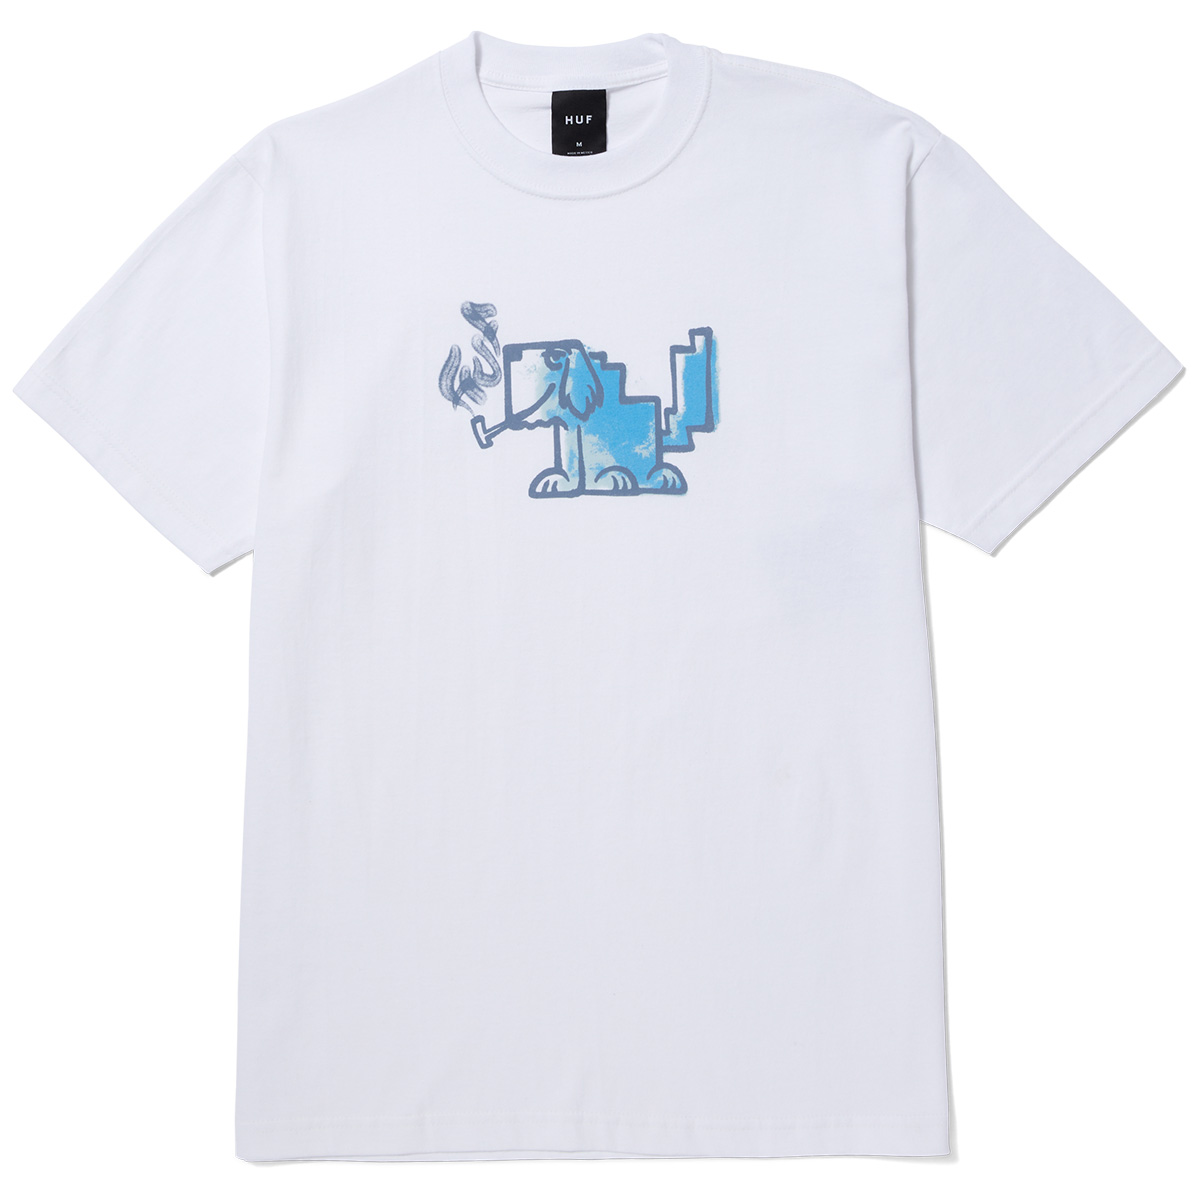 HUF Mod-Dog T-Shirt White